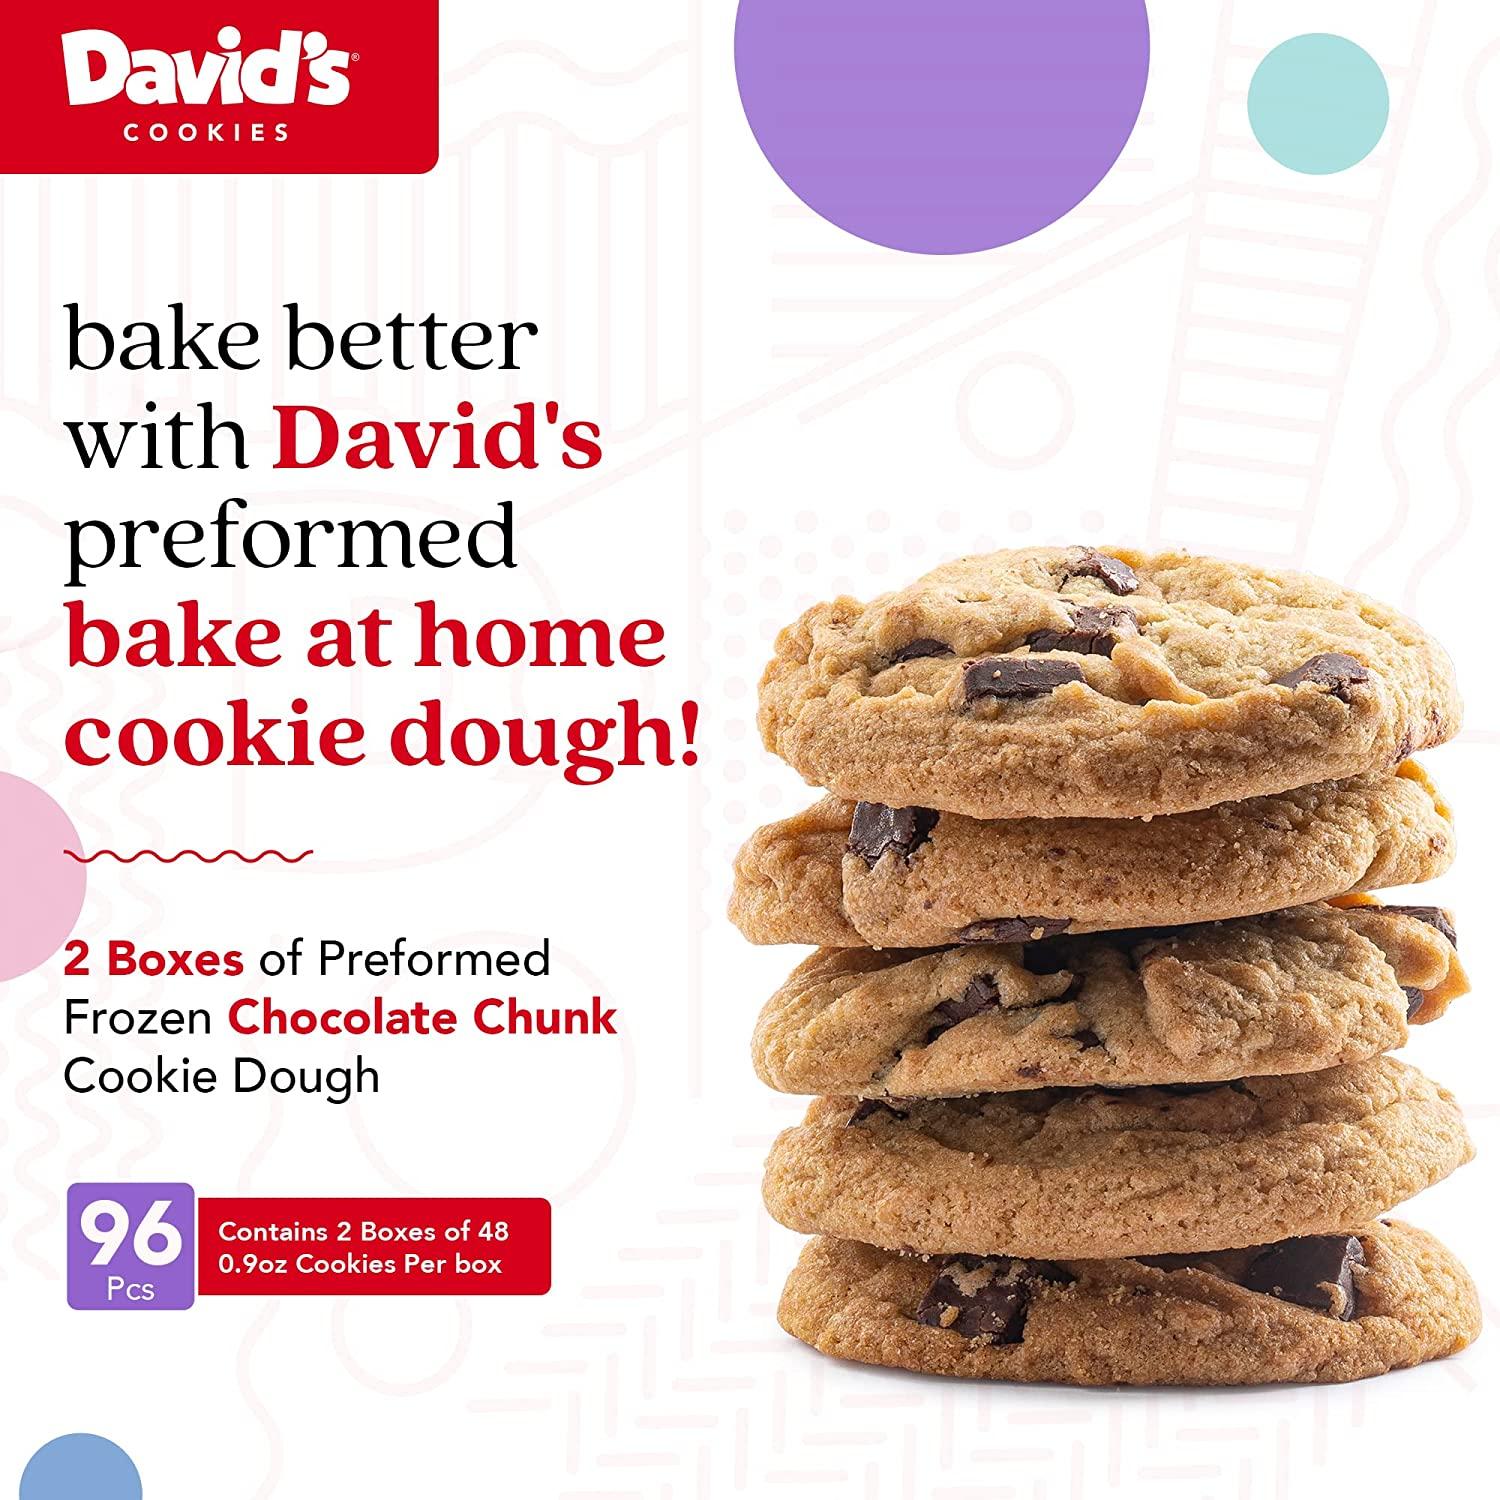 David's Cookies 90-piece Gourmet Chocolate Chunk Frozen Cookie Dough